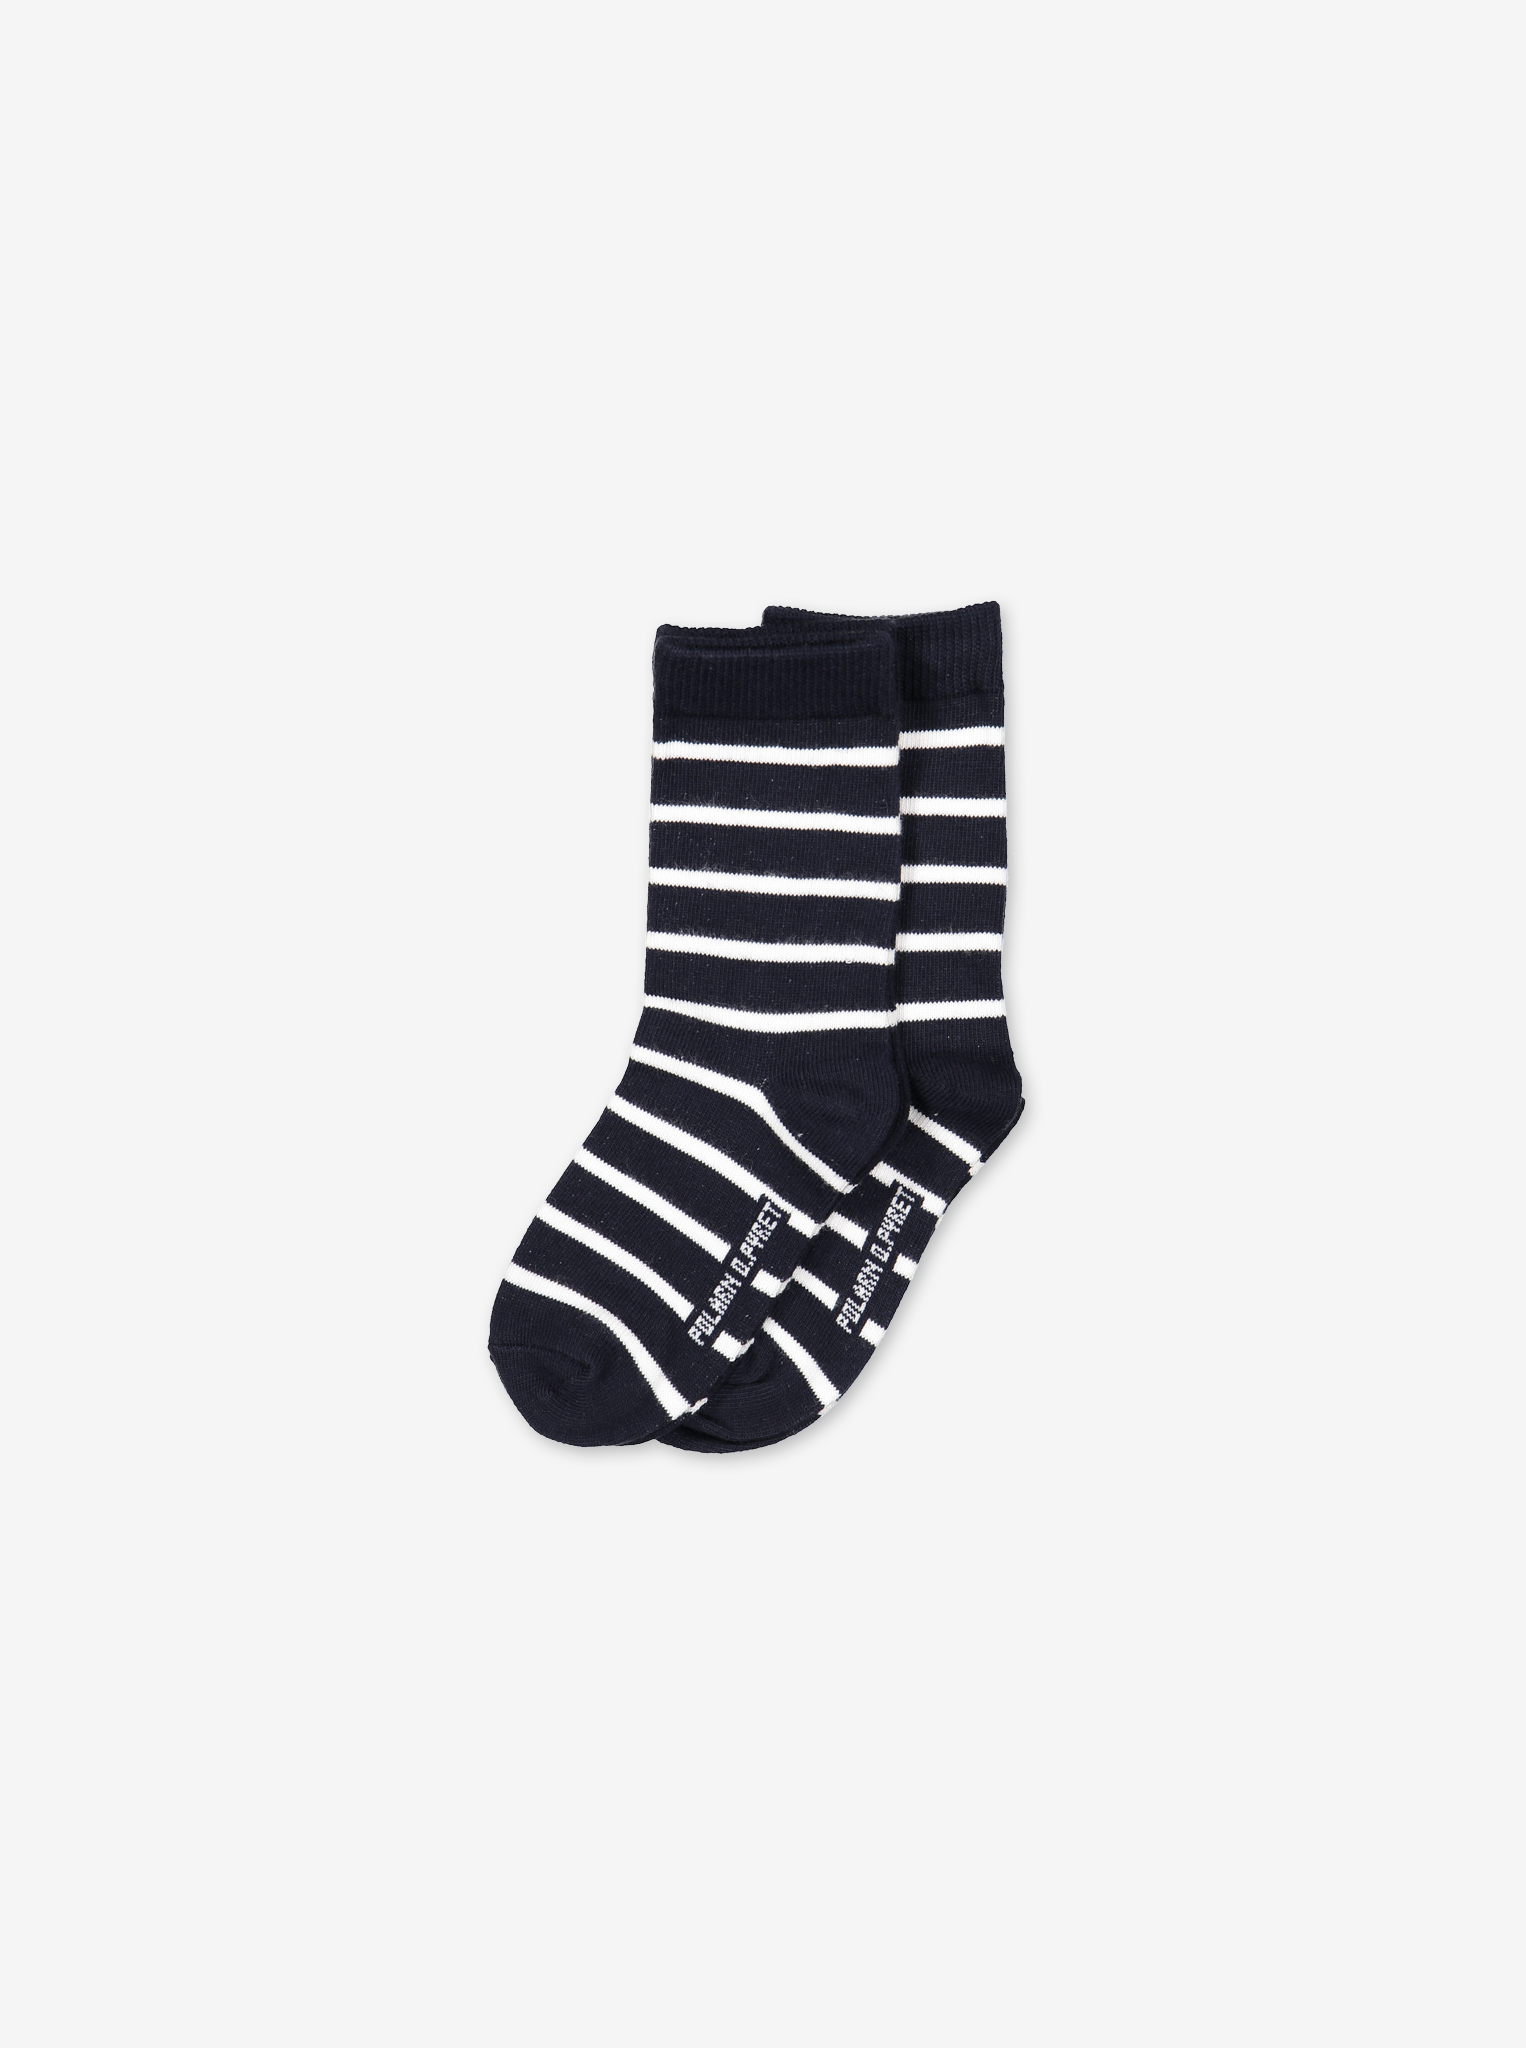 2 Pack Striped Baby Socks